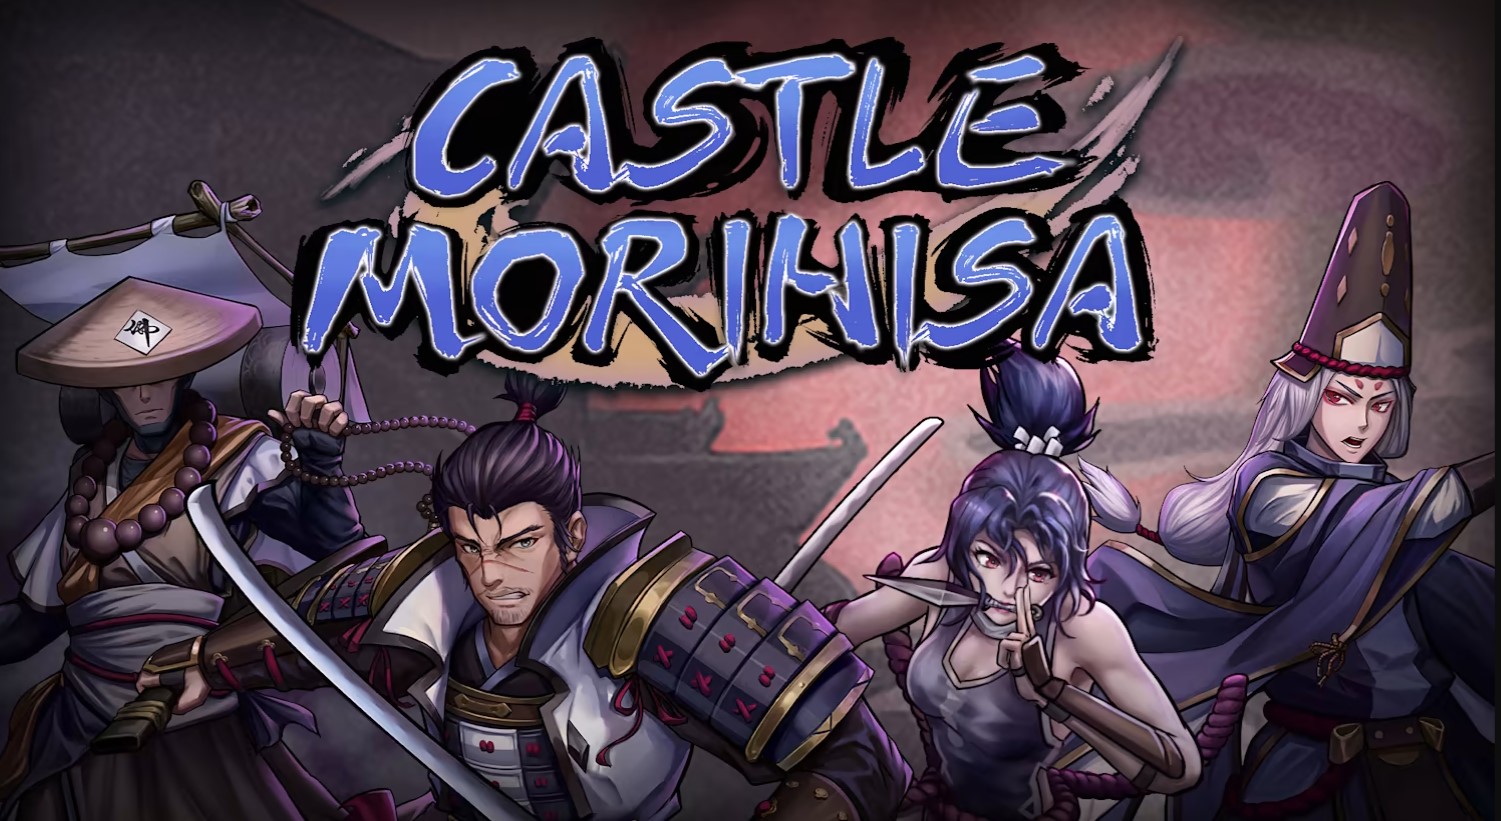 Castle Morihisa review – Believe it